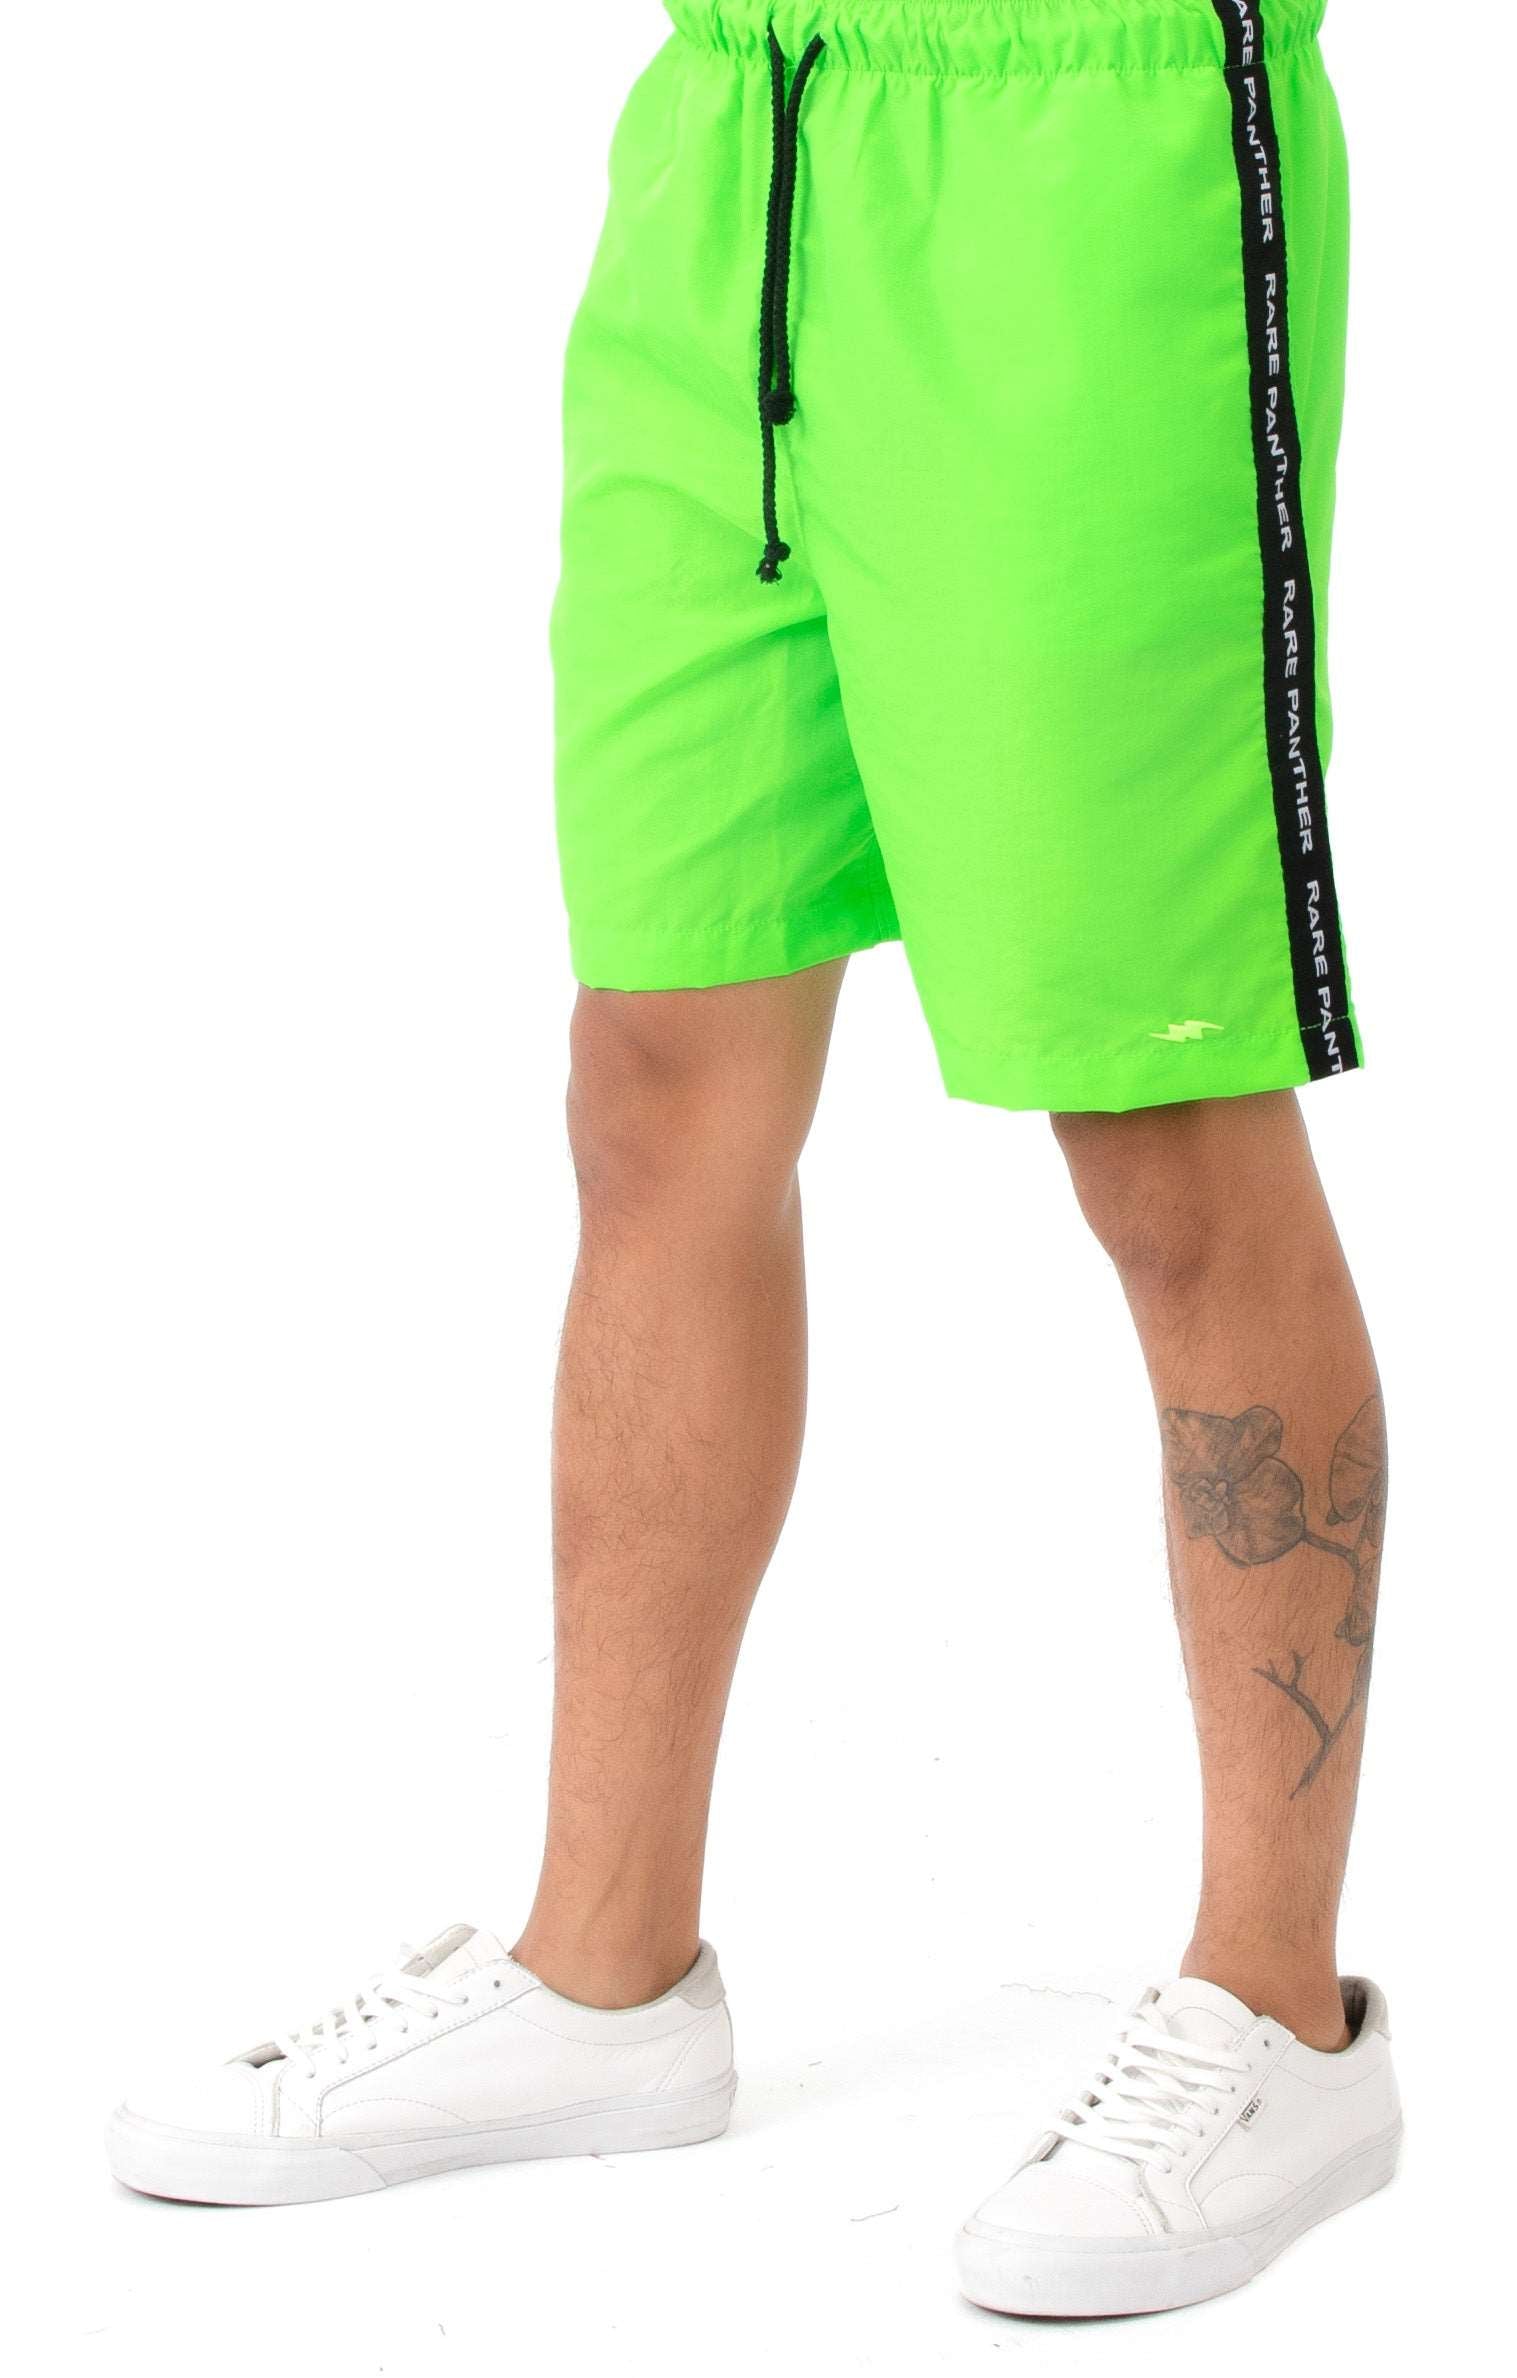 Athletic Shorts - Neon